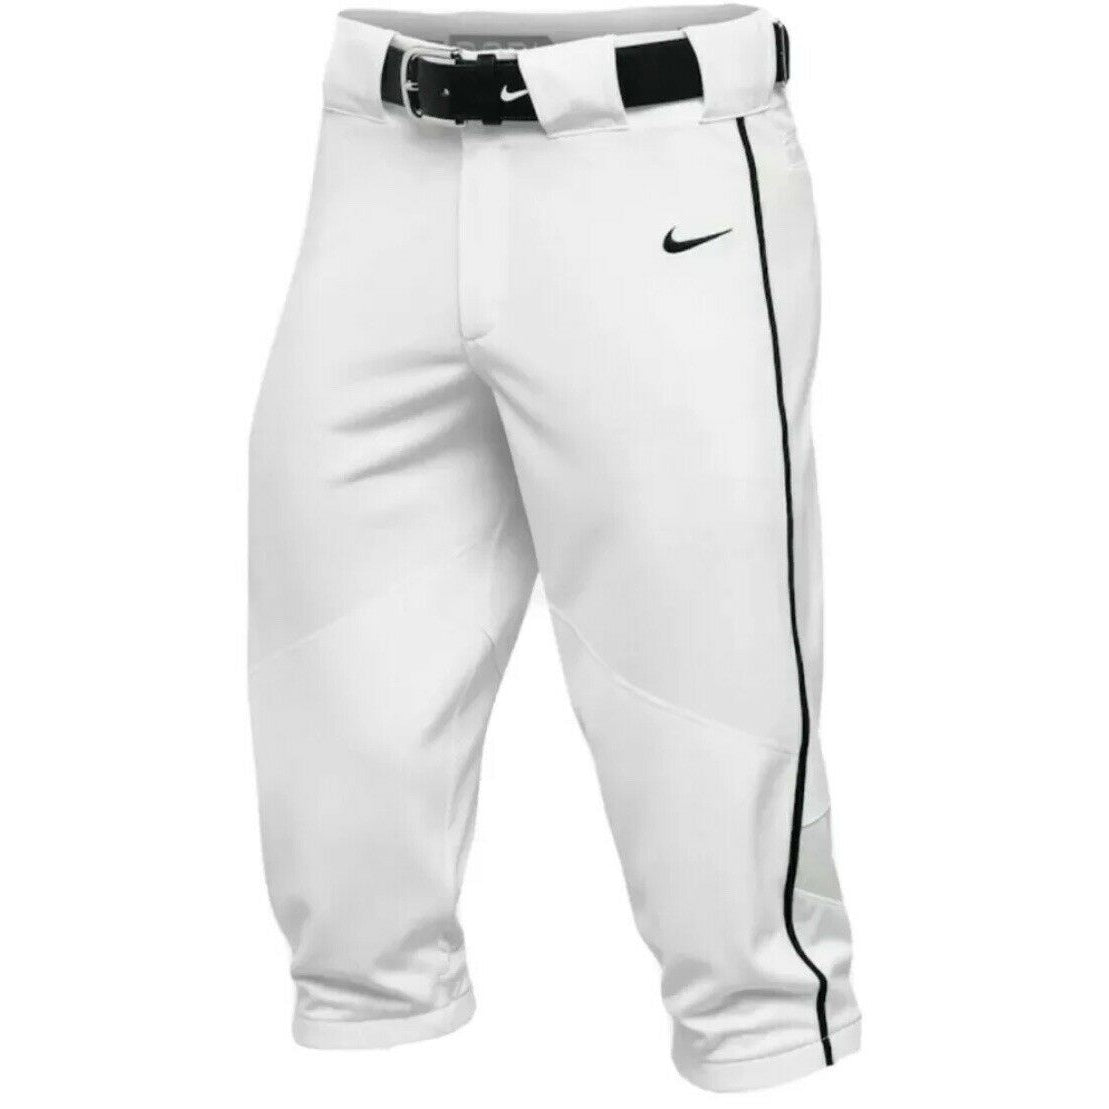 Nike / Men's Pro Vapor Baseball Pants